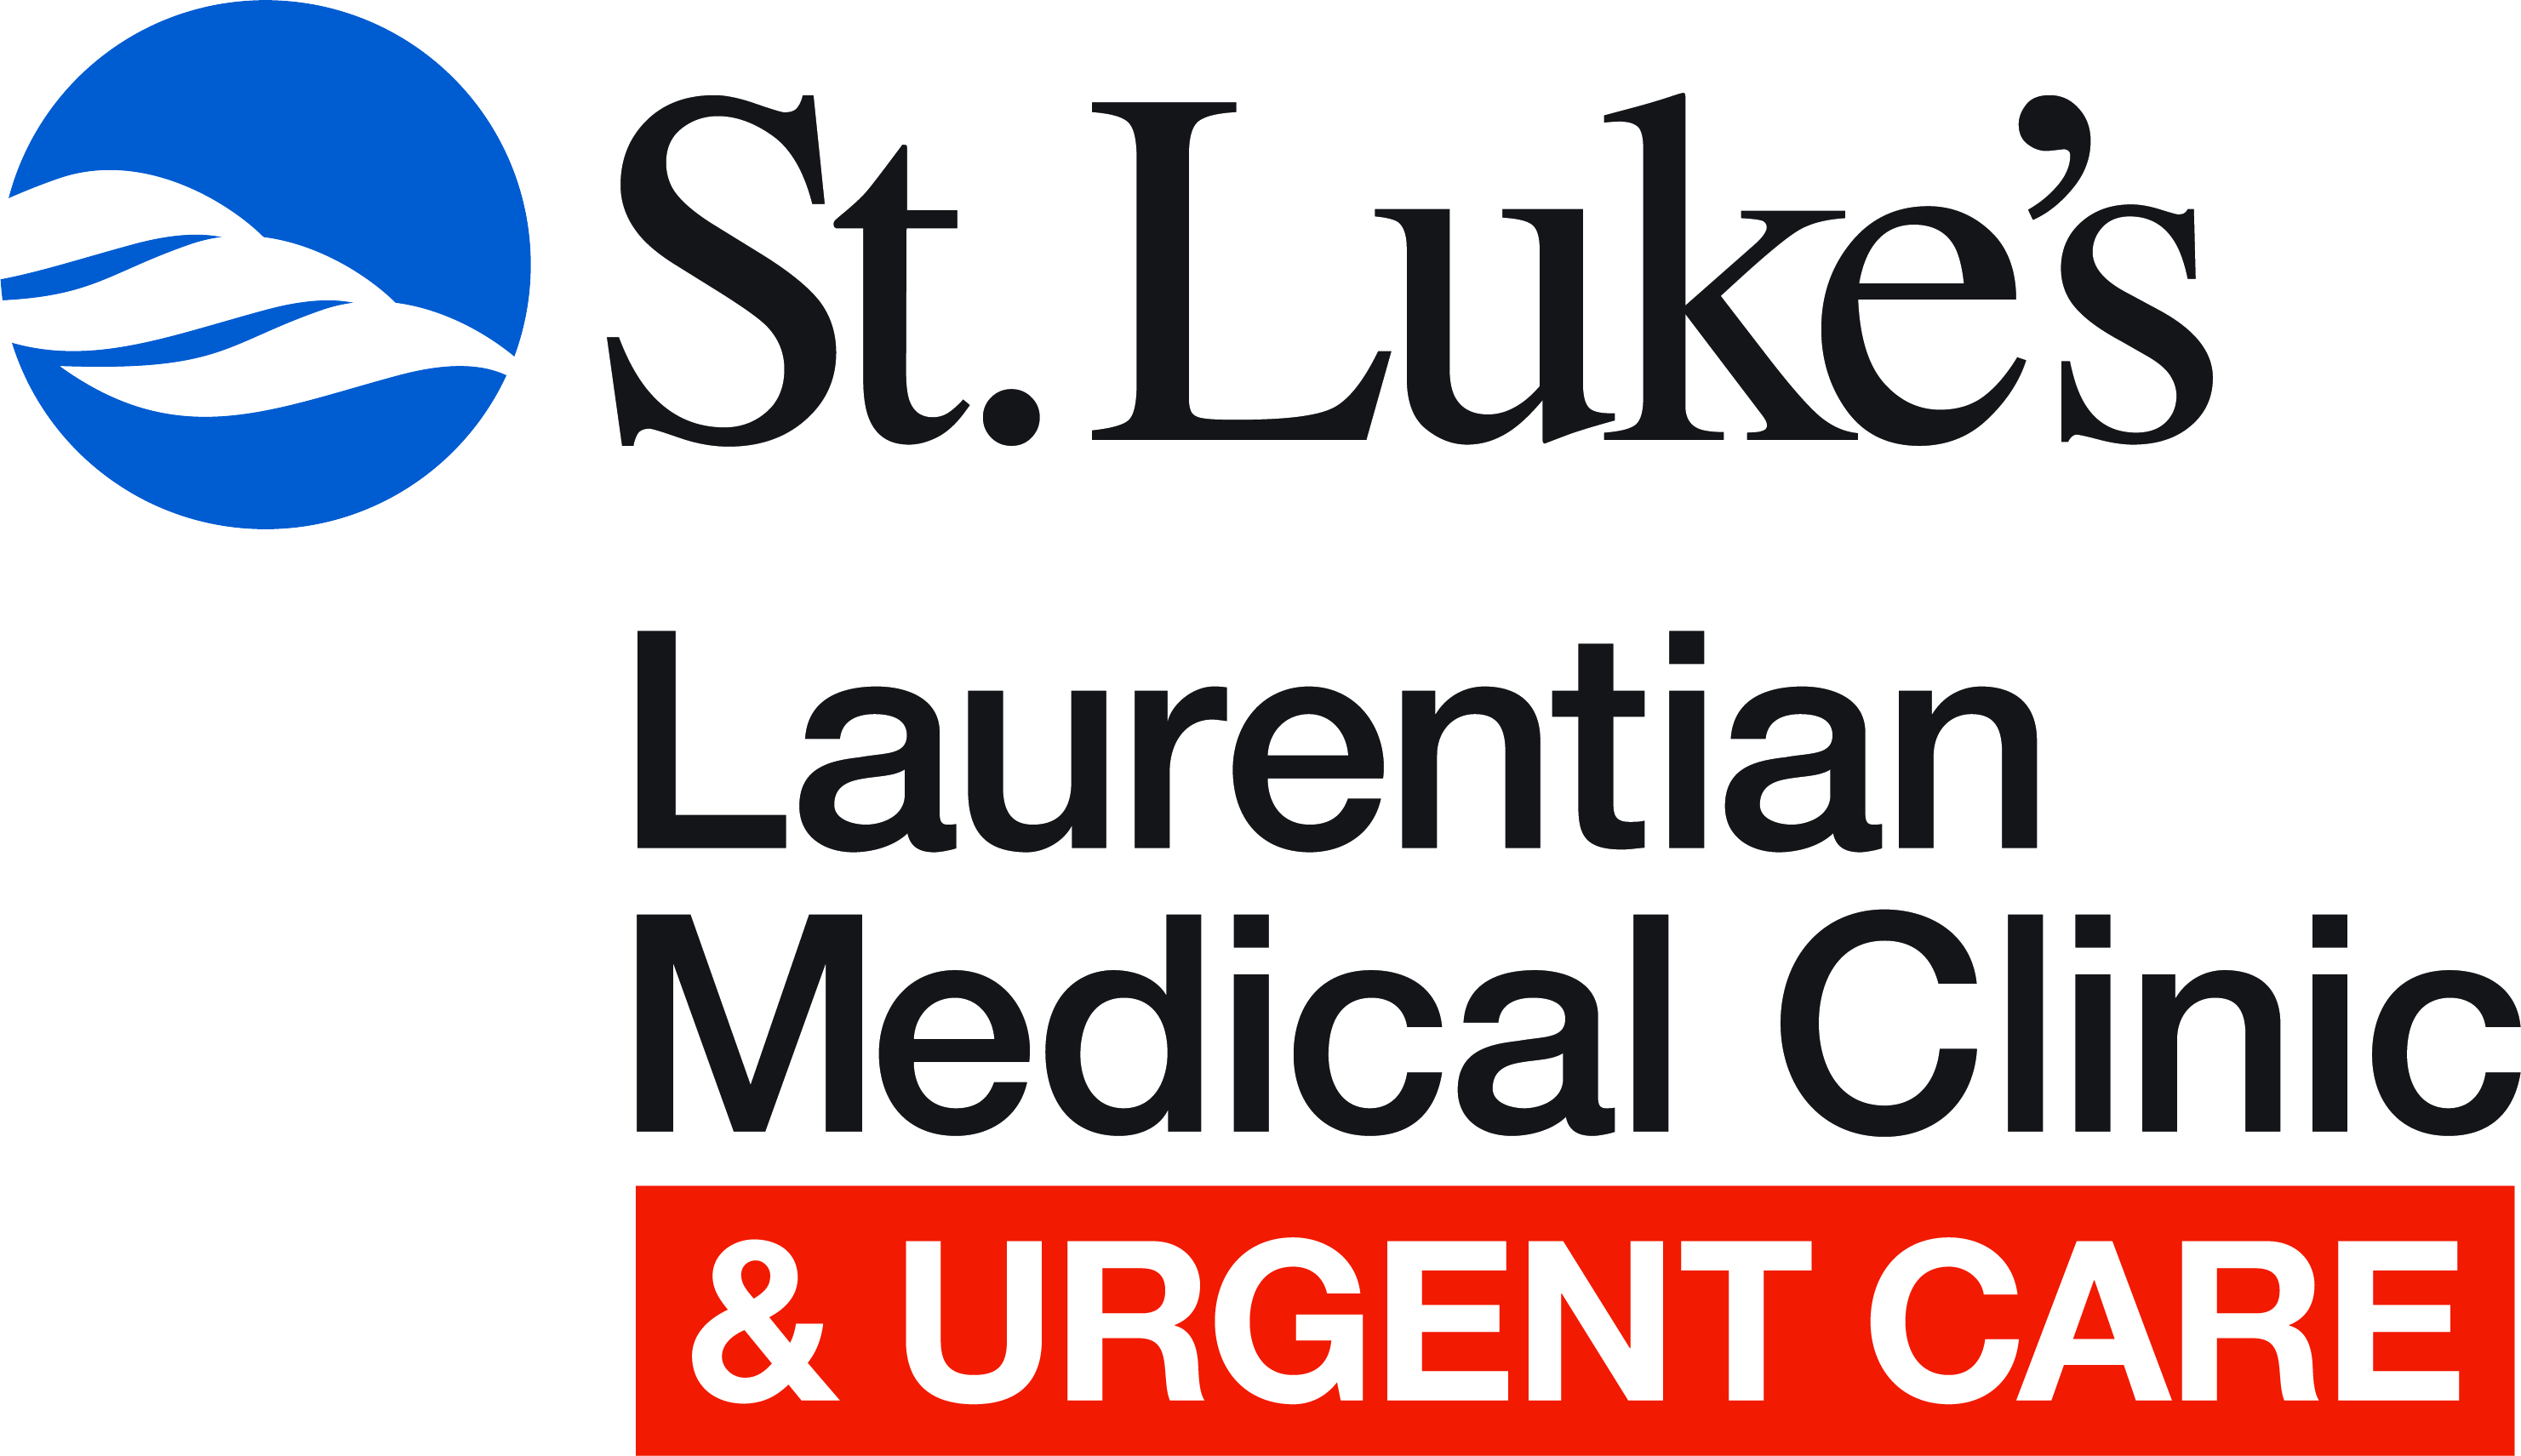 St. Luke’s Laurentian Medical Clinic Urgent Care Now Open 7 Days a Week